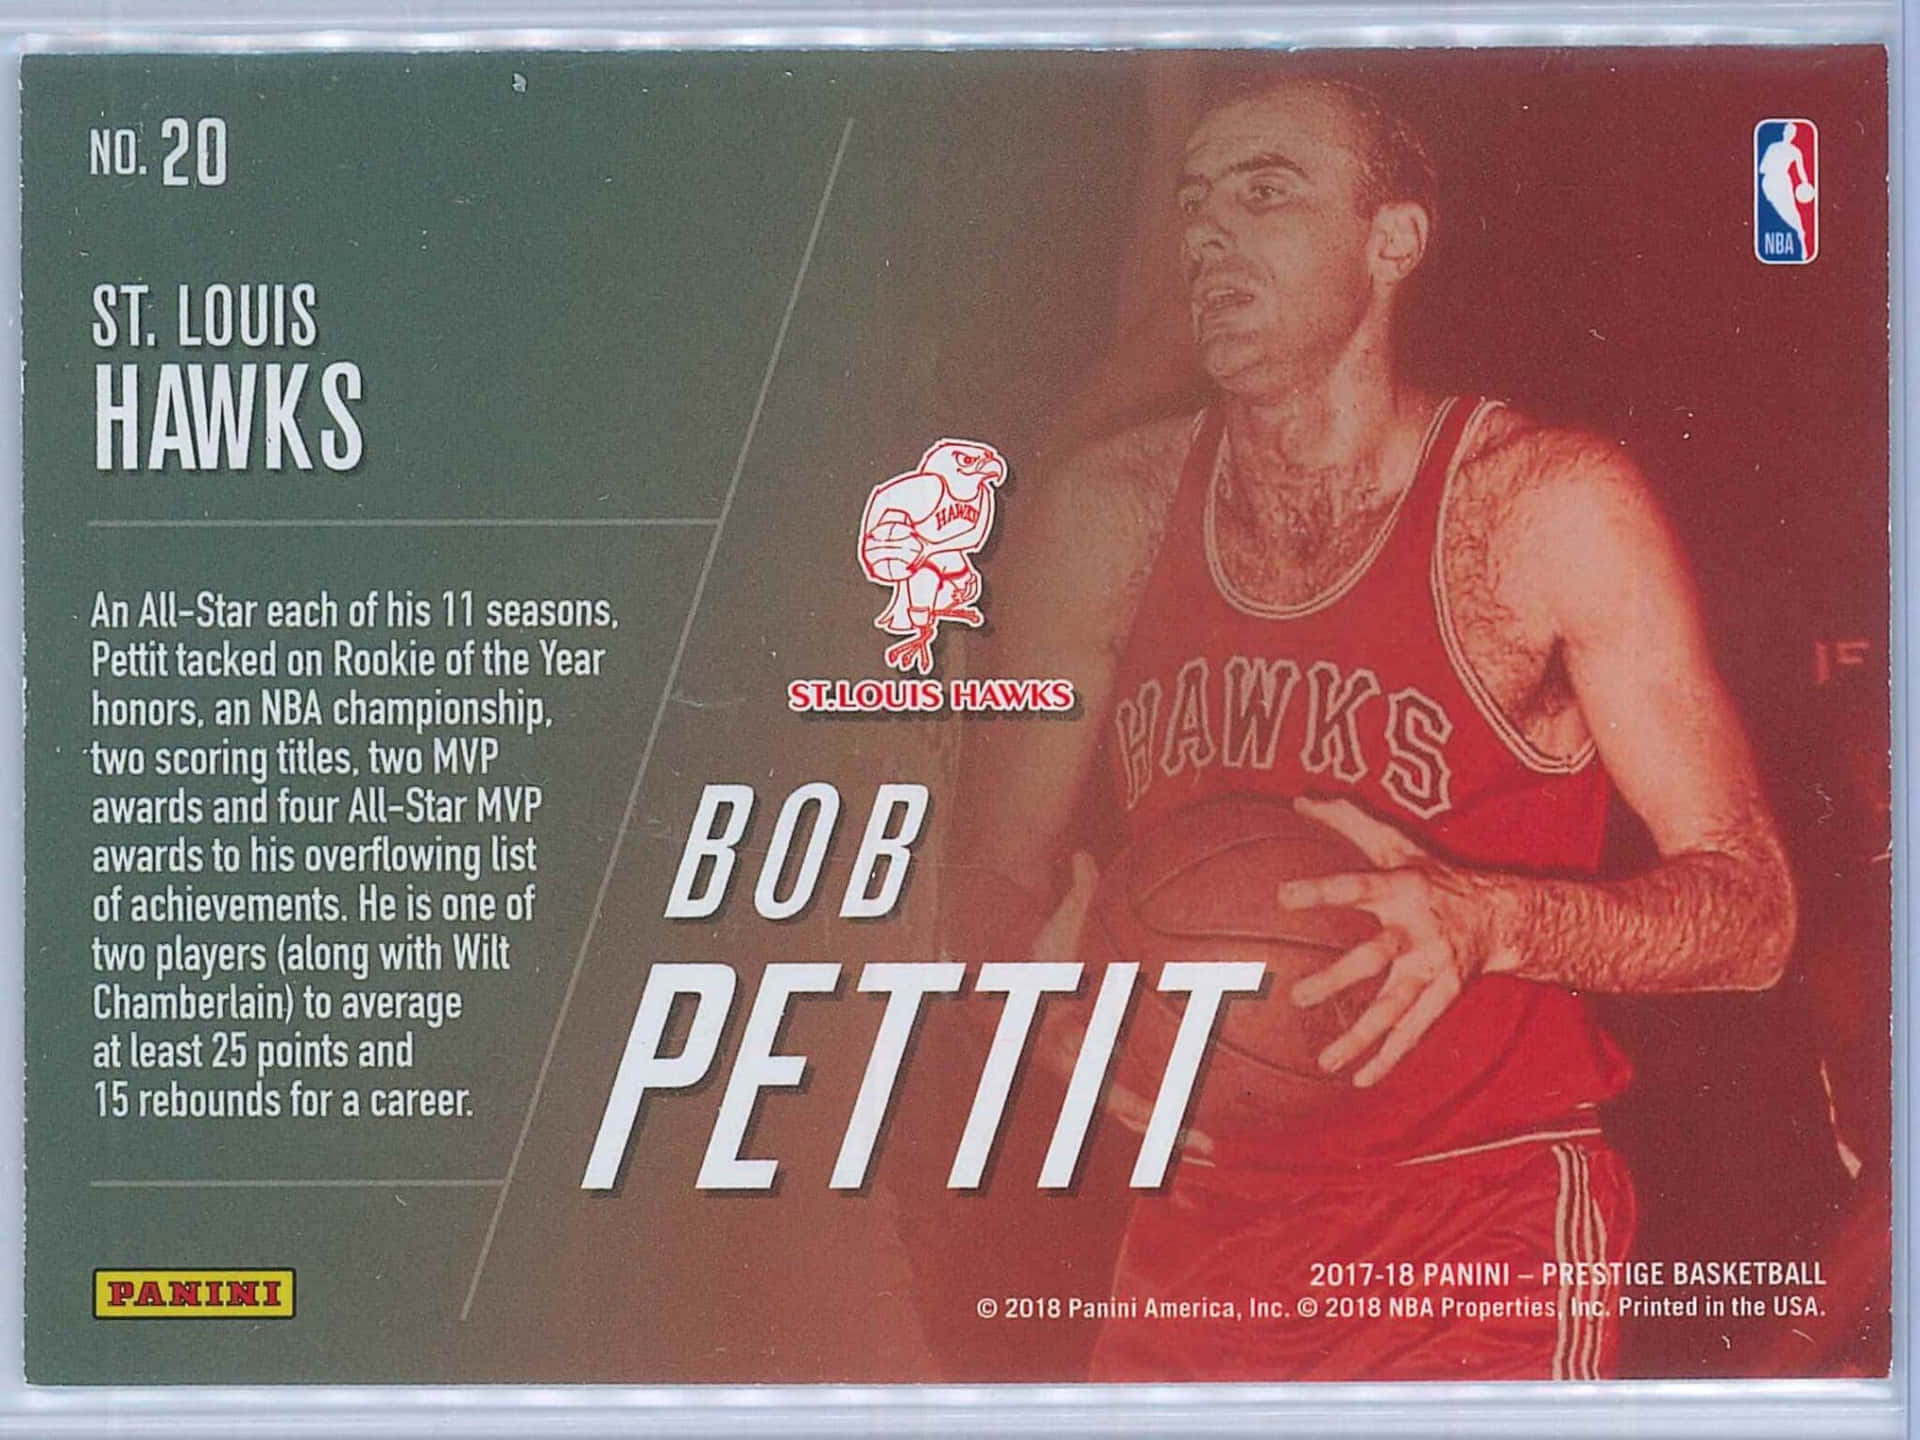 Bob Pettit Basketball Card With Information Wallpaper